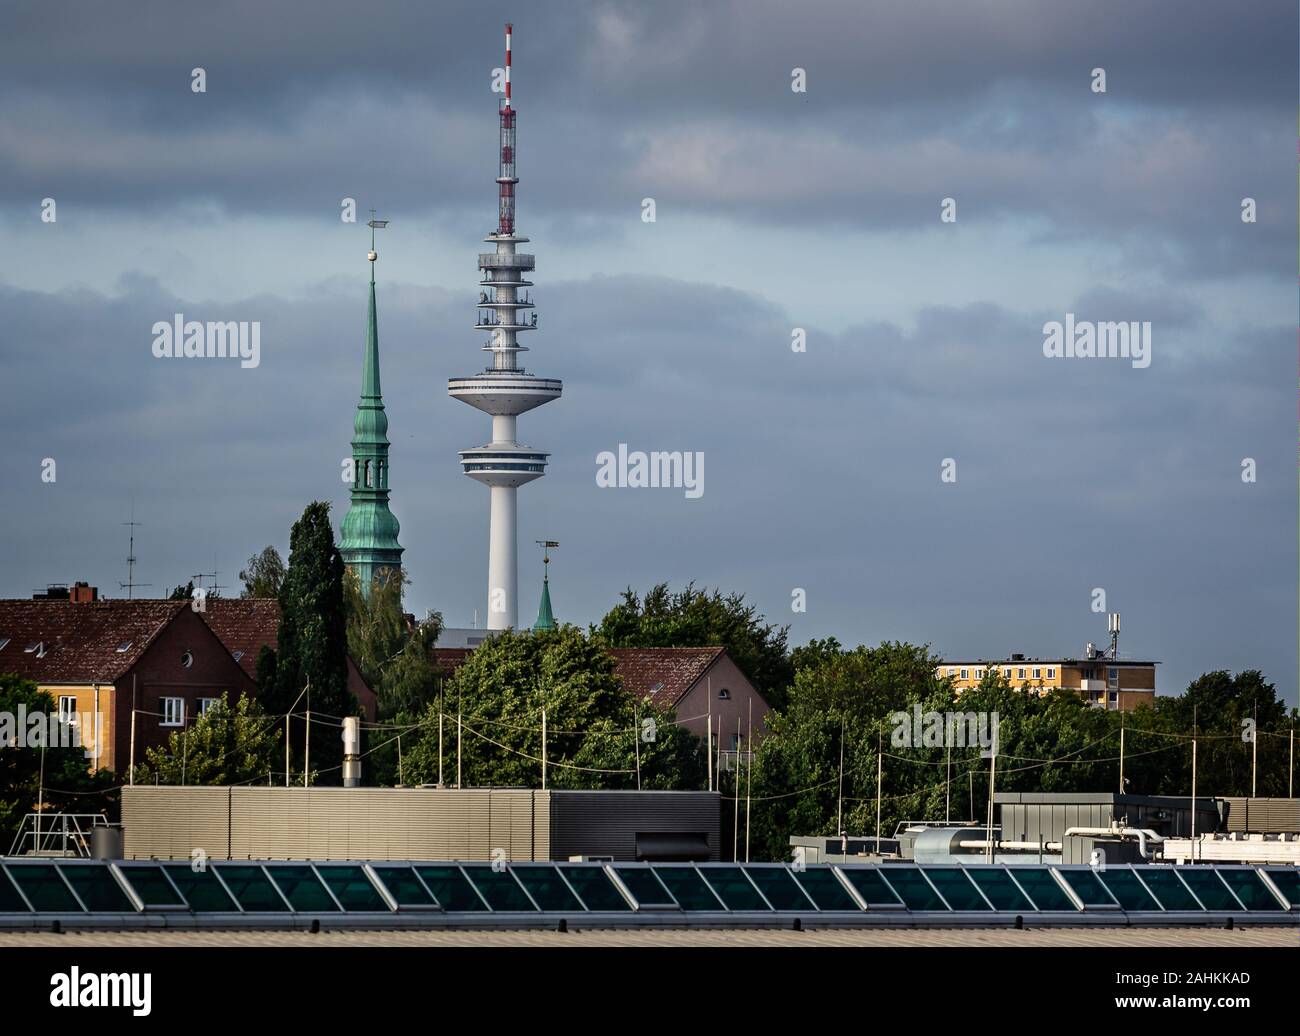 Heinrich Hertz tower - forno a microonde telecommunication tower - dal fiume Elba ad Amburgo in Germania il 16 Luglio 2019 Foto Stock